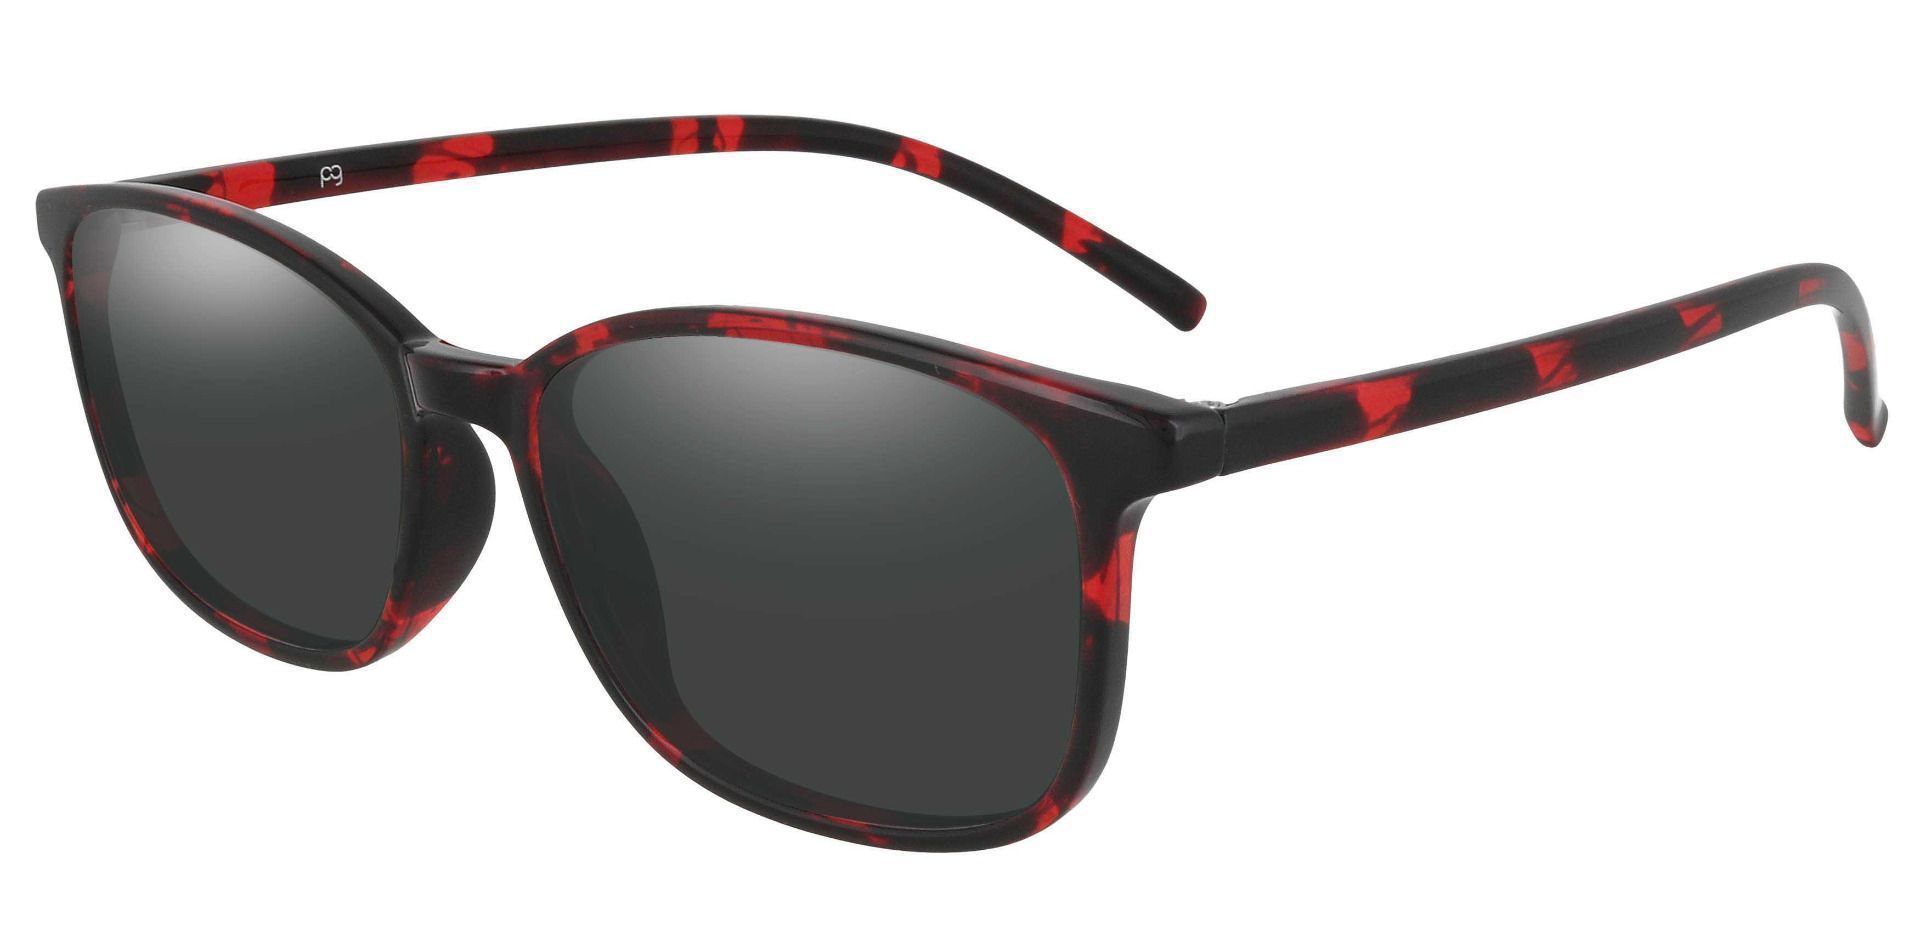 Onyx Square Prescription Sunglasses - Tortoise Frame With Gray Lenses